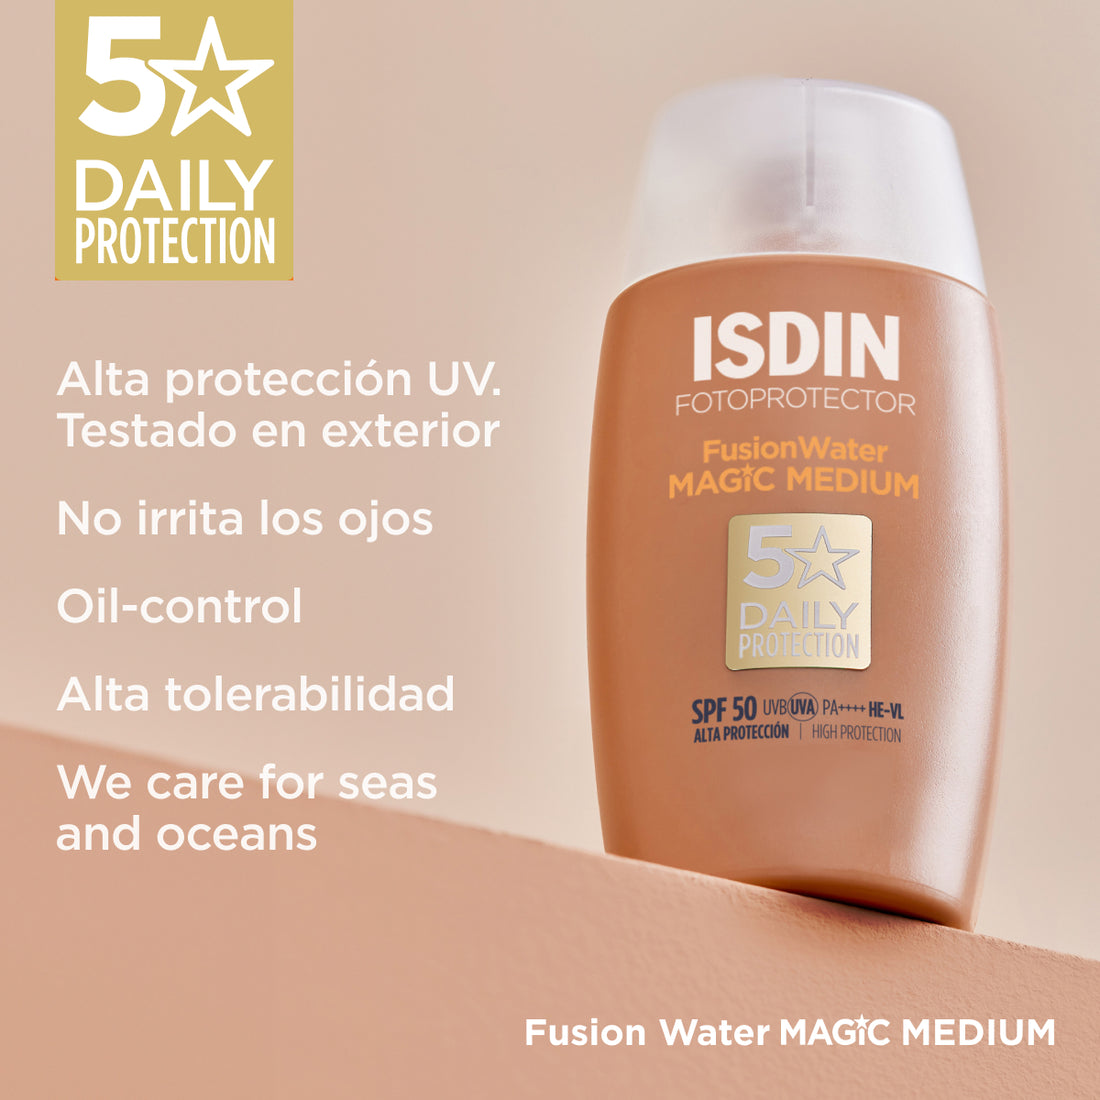 ISDIN Fotoprotector Fusion Water MAGIC Medium/Medio SPF 50 (50ml)